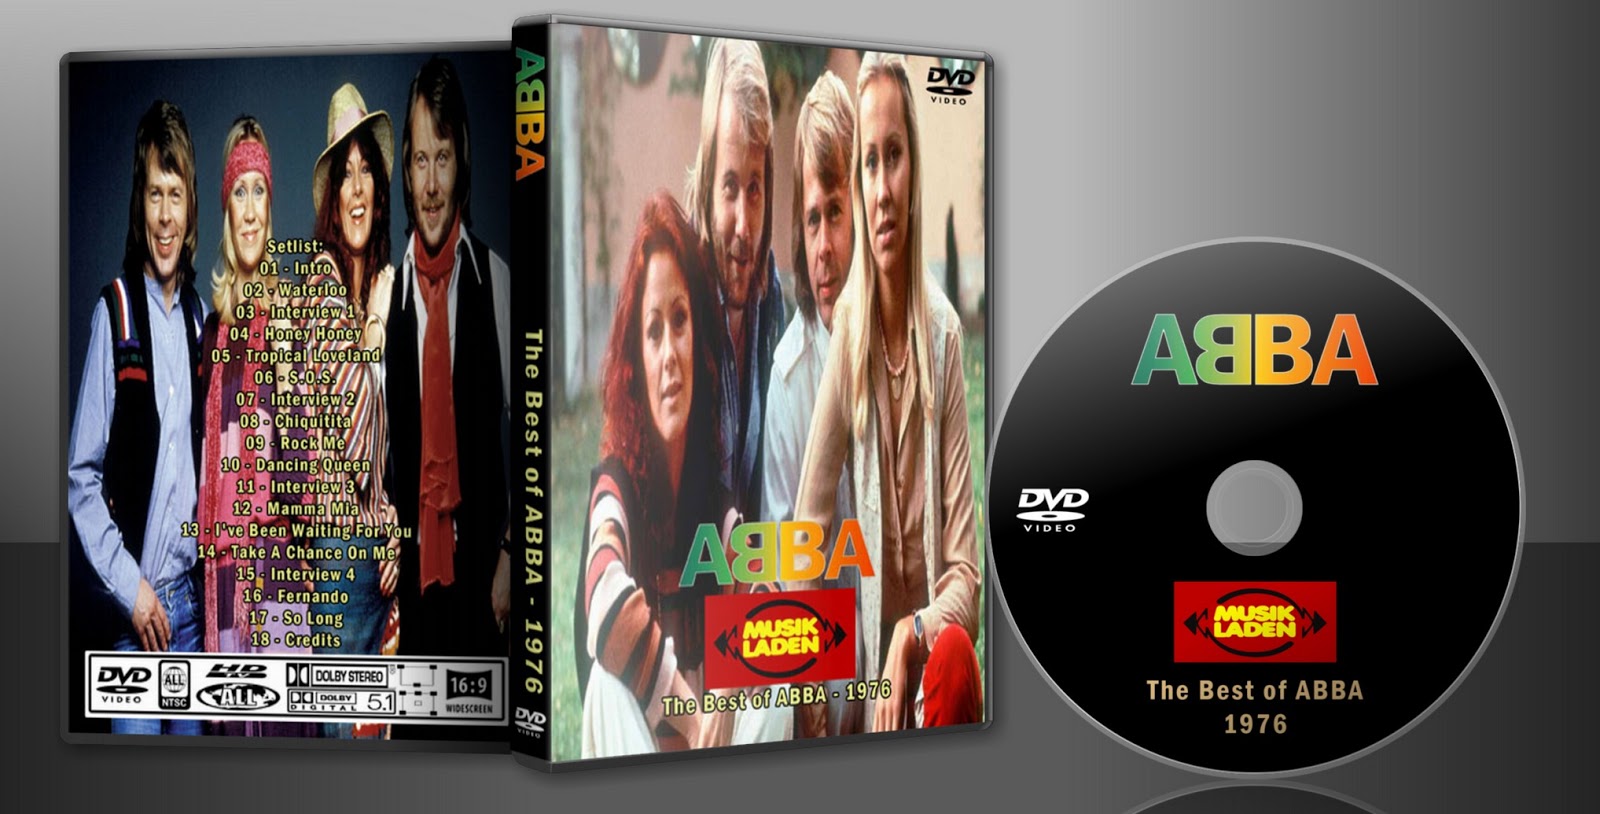 DVD For Members Of Deer 5001: ABBA - 1976 - Musikladen - The ABBA